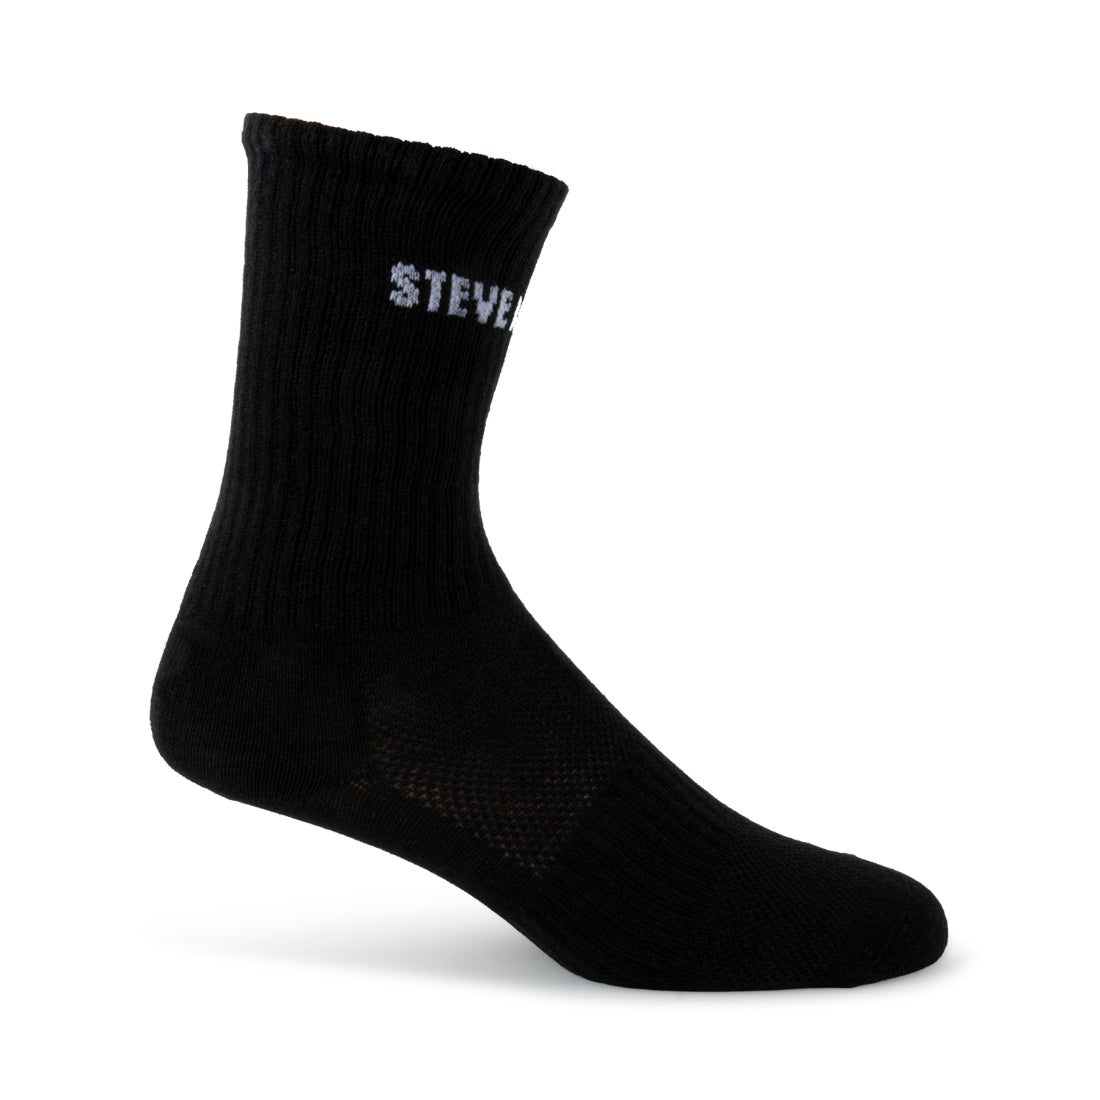 L-SHEER Black Sheer Nylon Tights & Socks  Women's Designer Accessories –  Steve Madden Canada